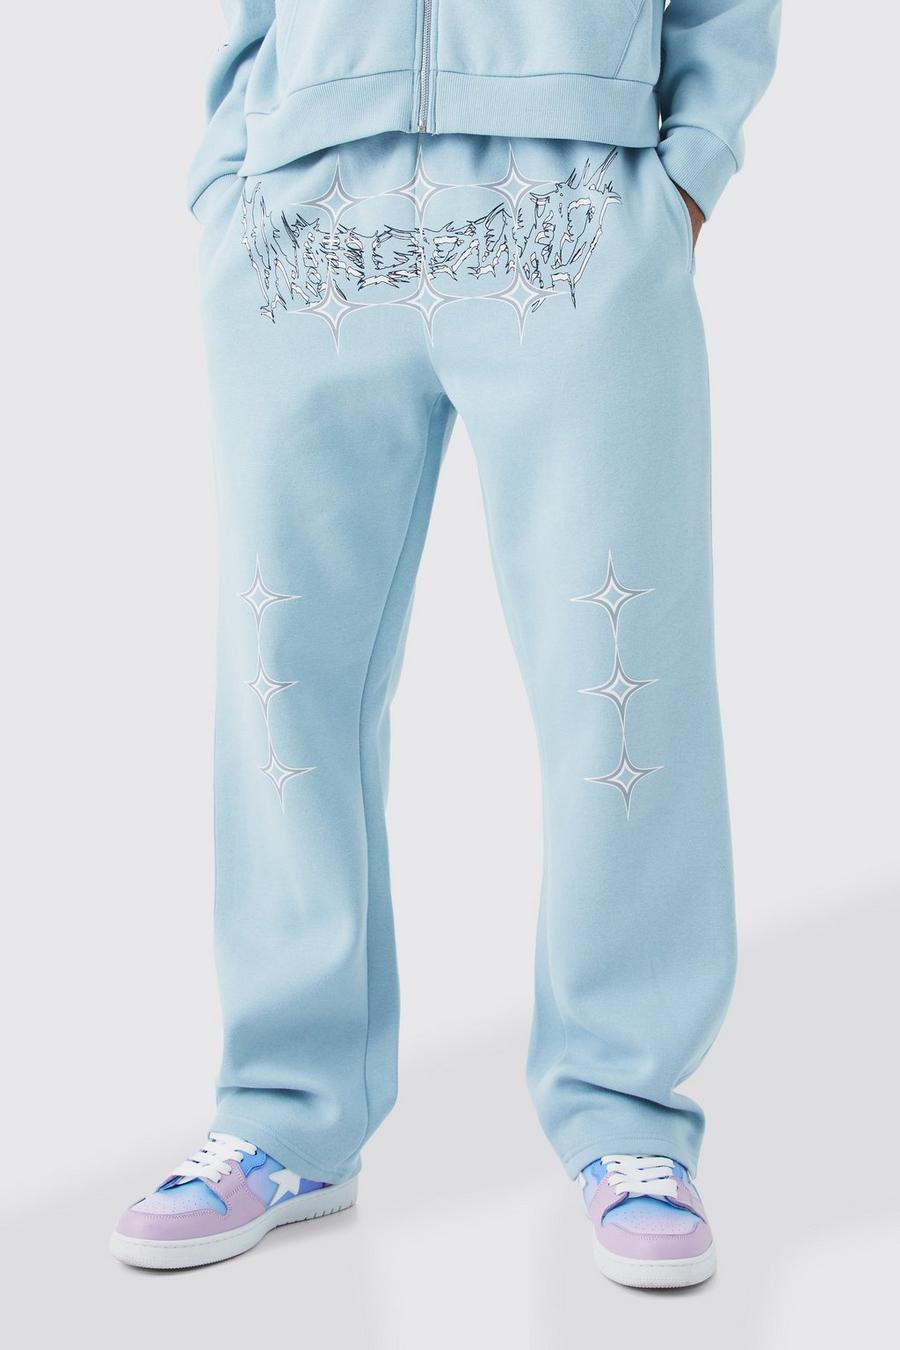 Pantalón deportivo holgado con estampado grunge Homme, Blue